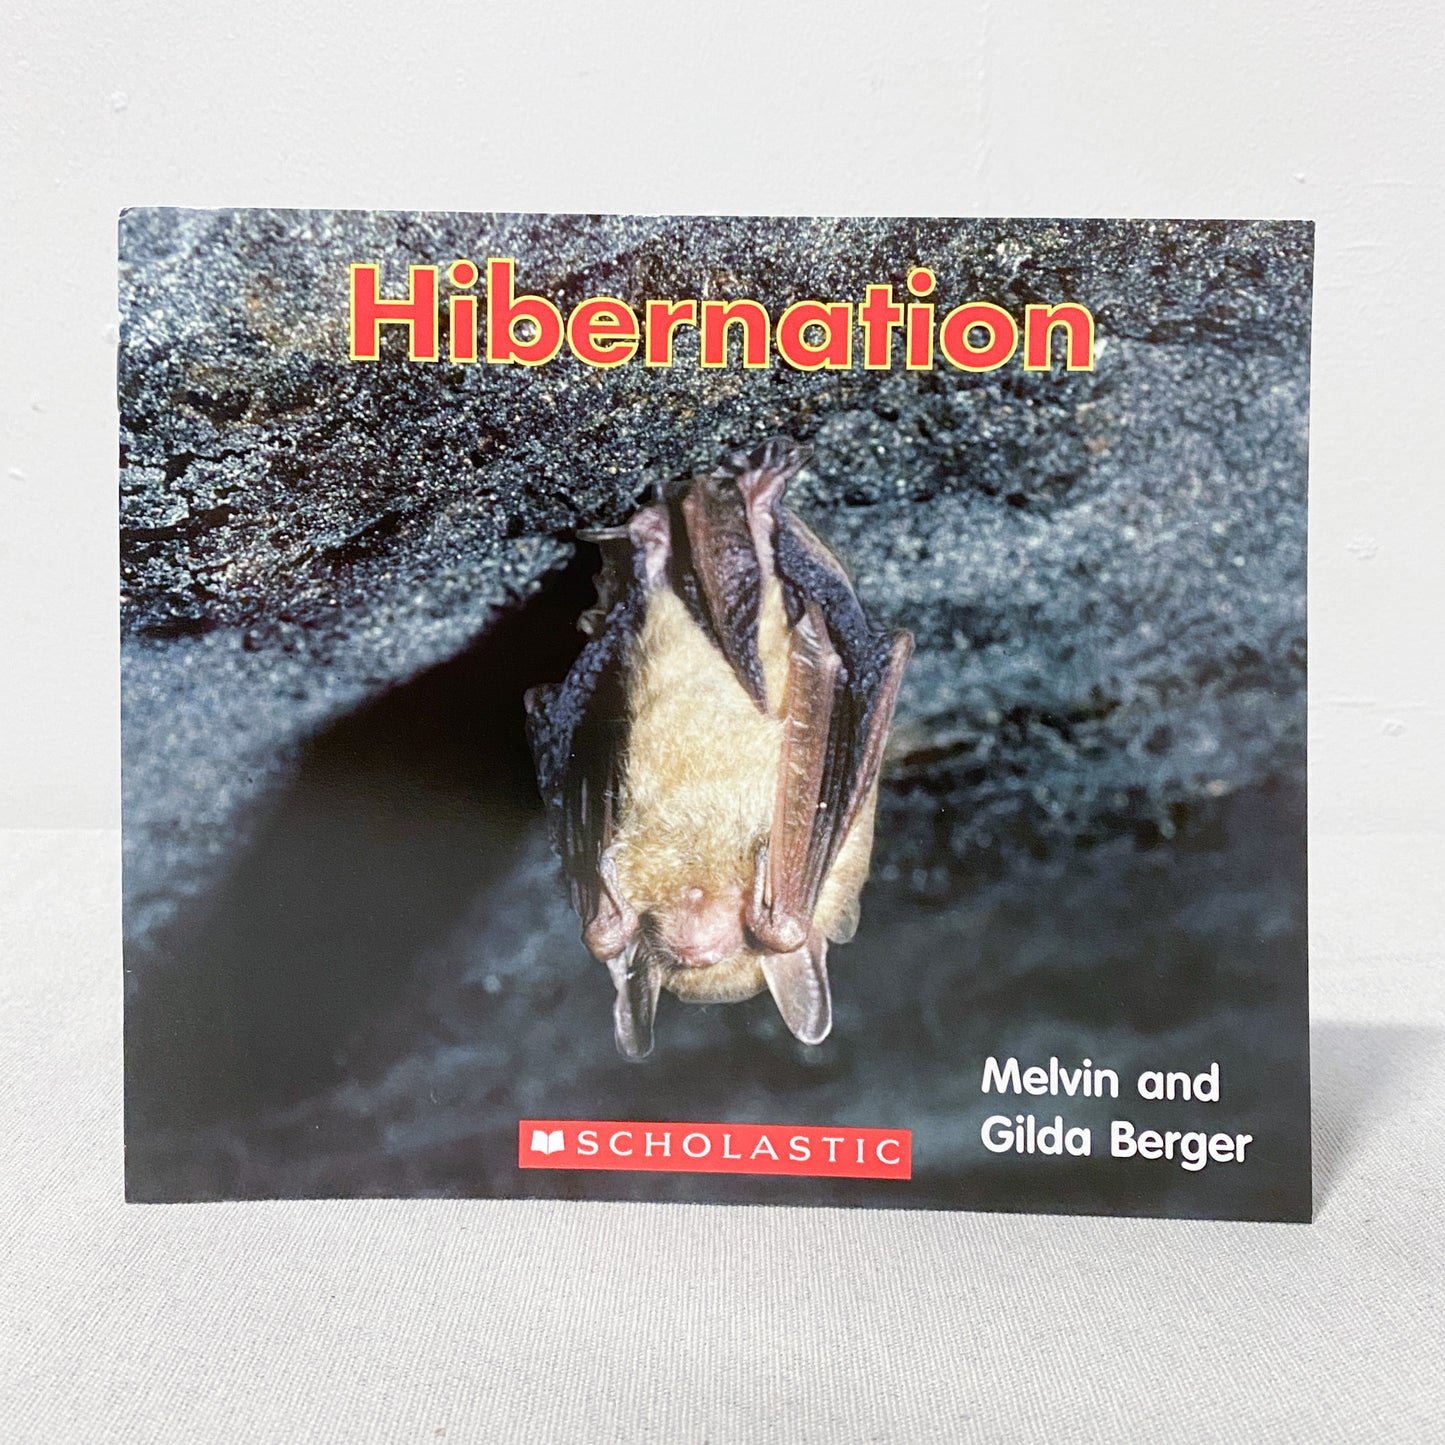 ‘Hibernation’ Kids Book